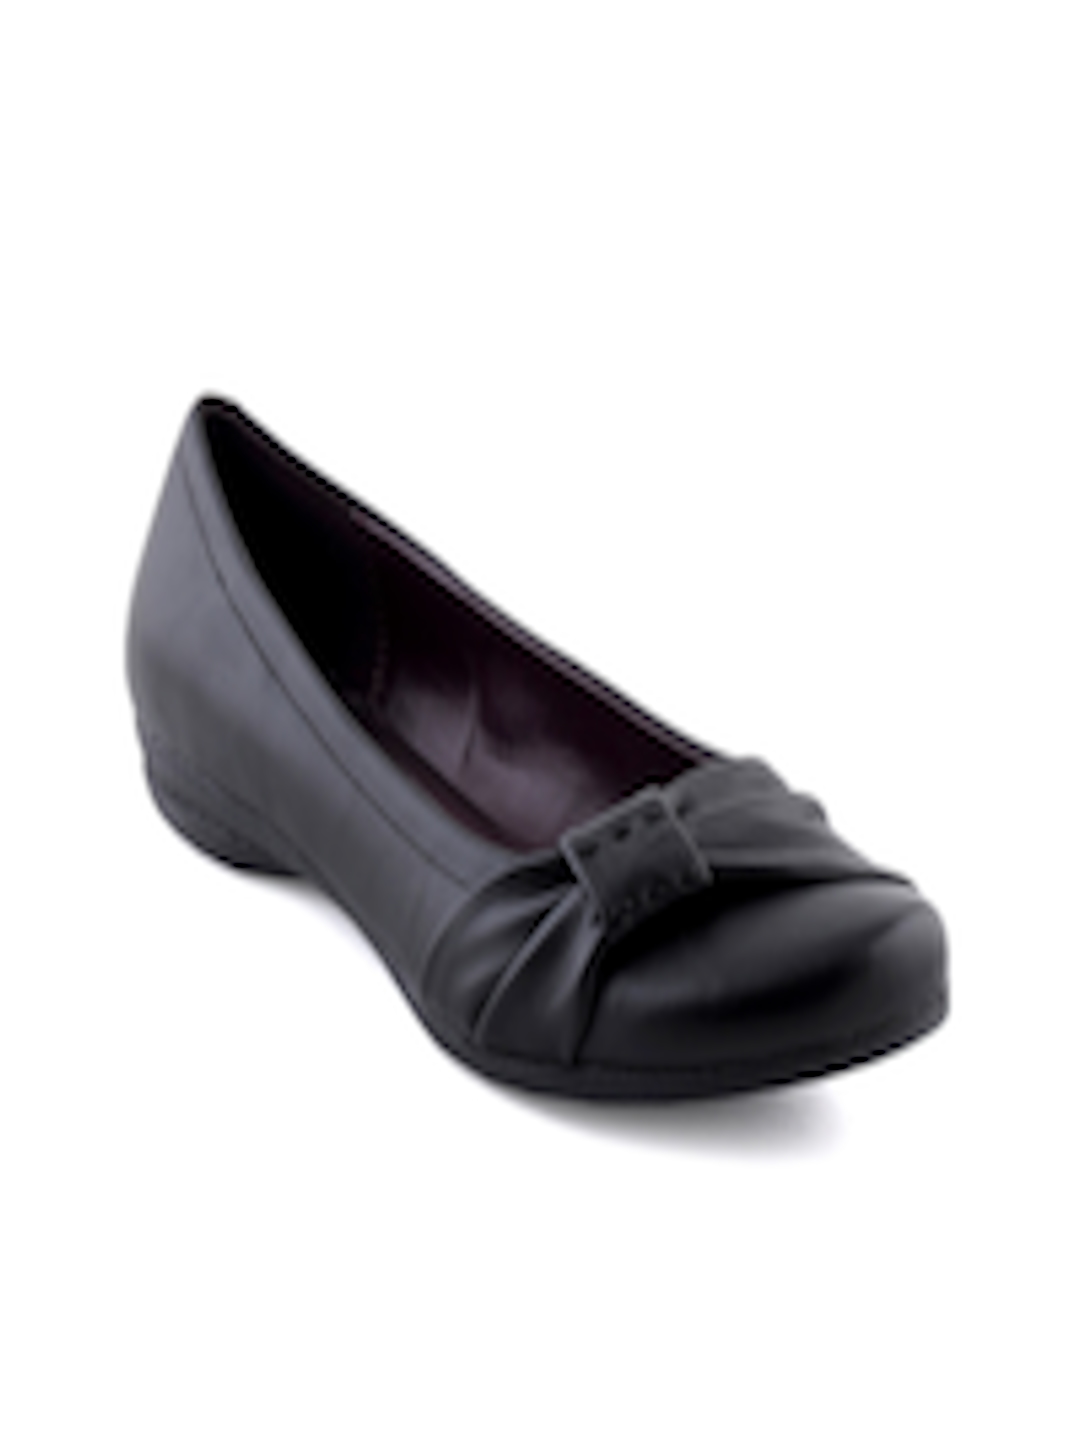 Buy Clarks Women Black Leather Ballerinas - Flats for Women 23796 | Myntra